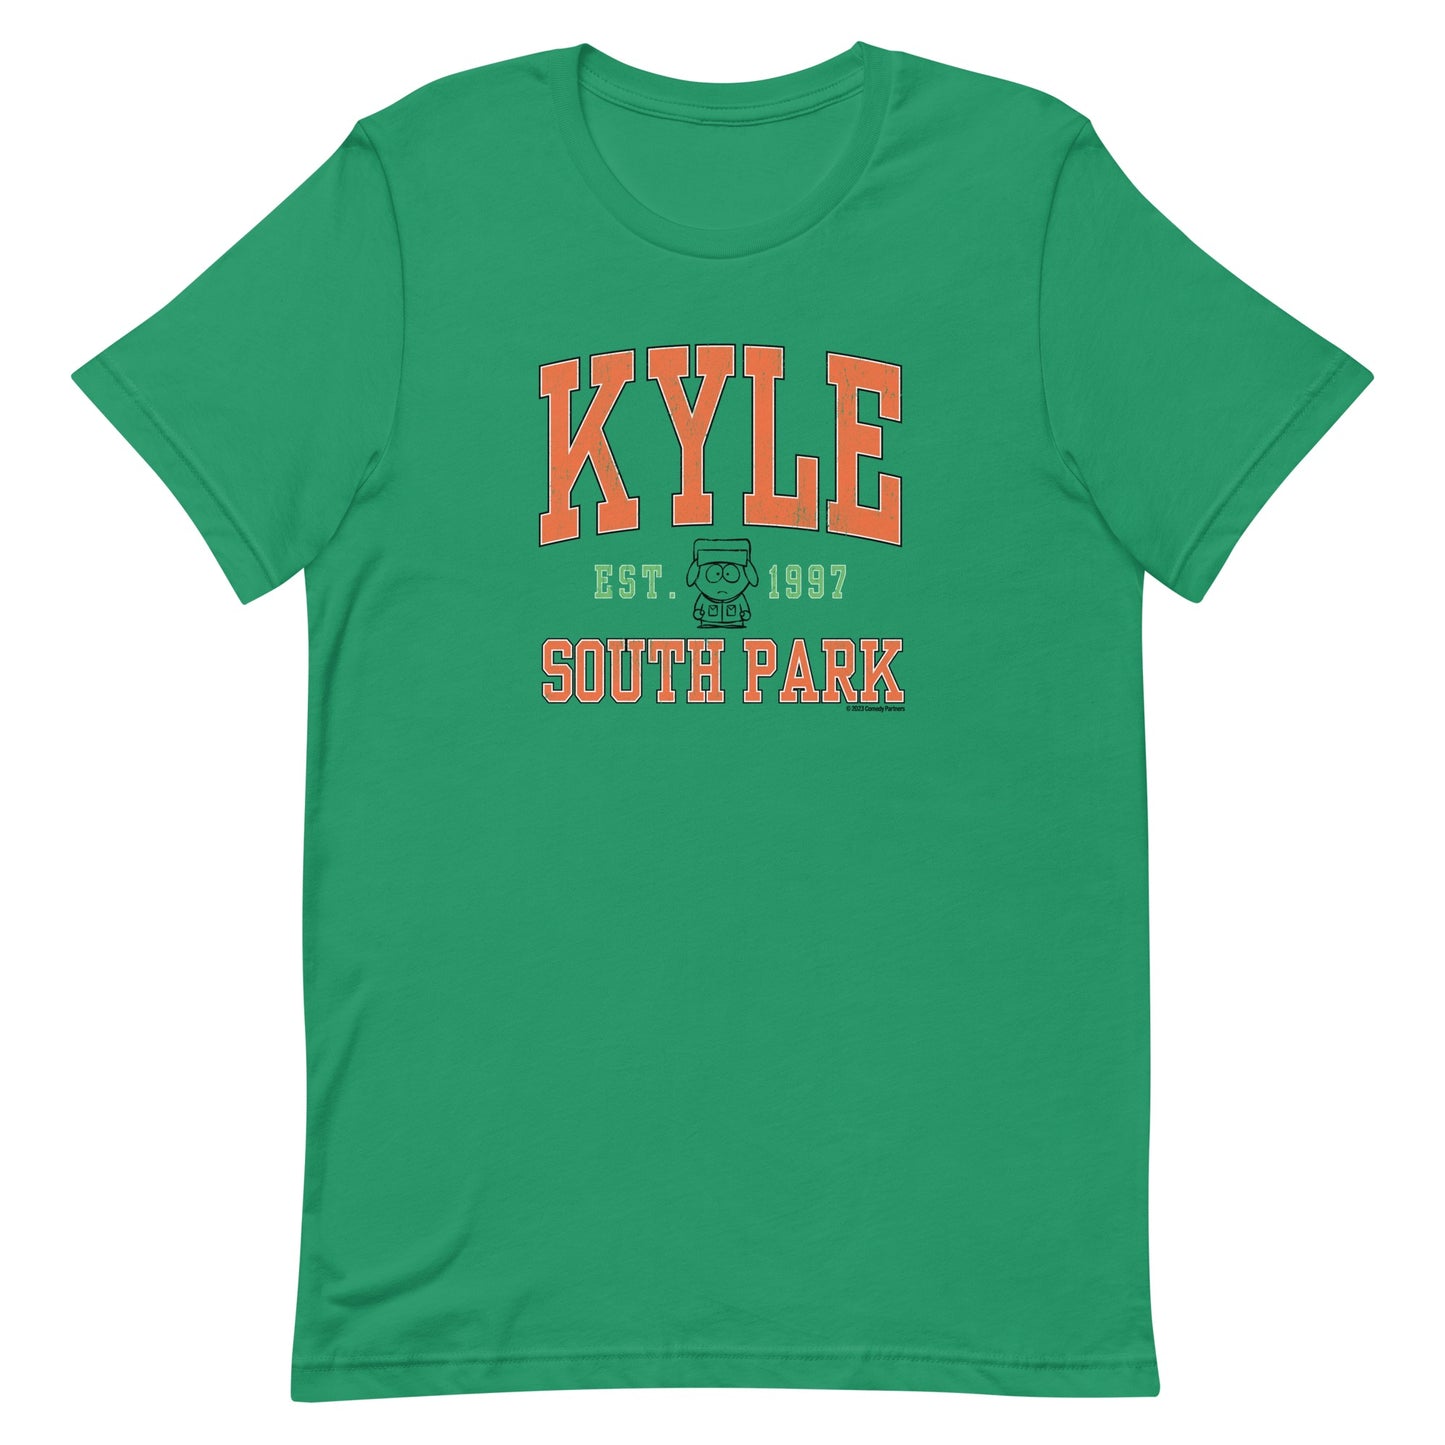 South Park Kyle T-Shirt für Studenten